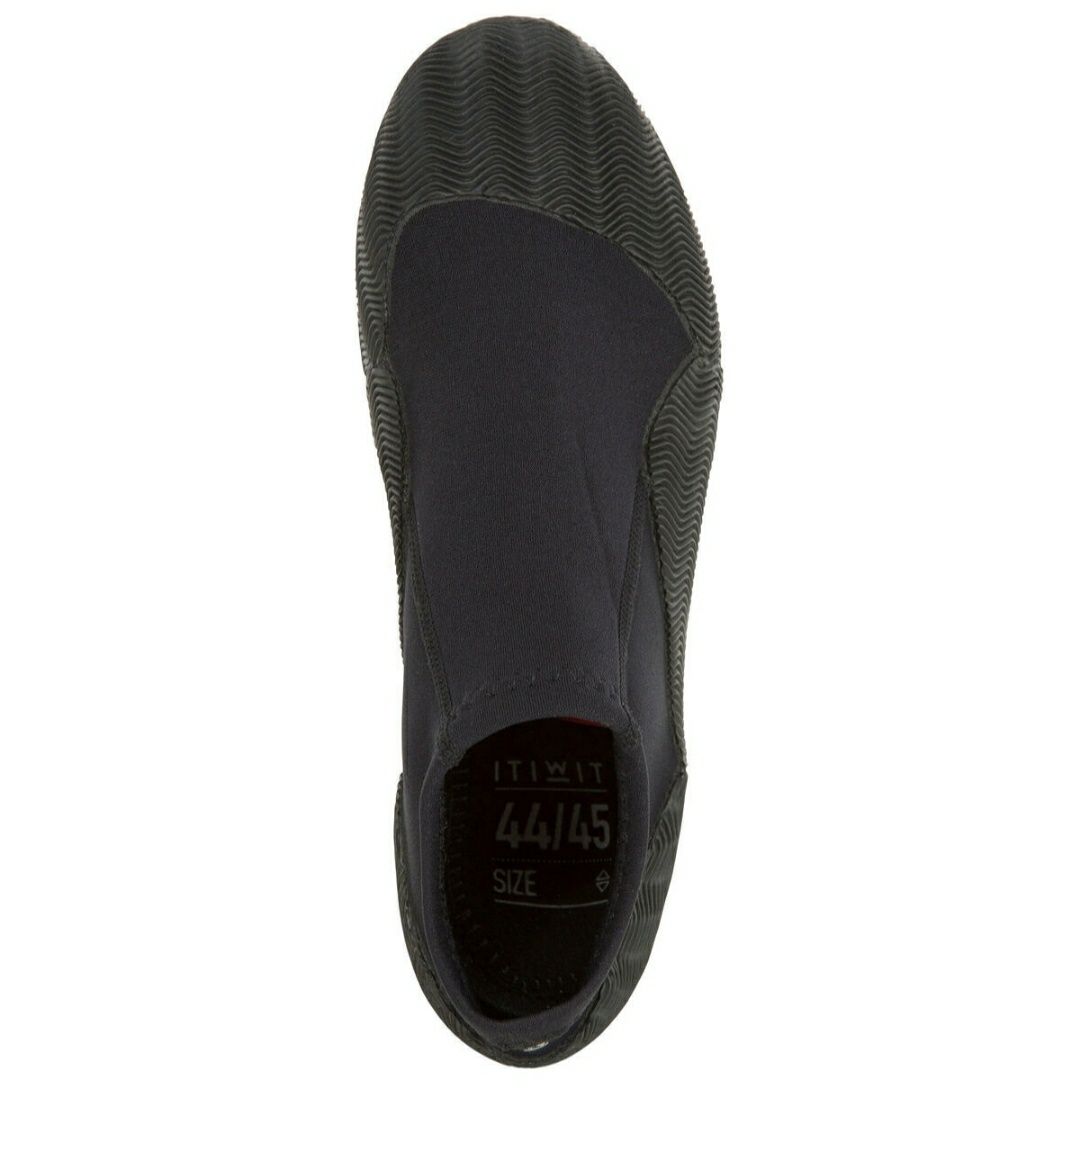 Decathlon - Itwit - buty niskie - żagle, SUP - neopren 1.5mm